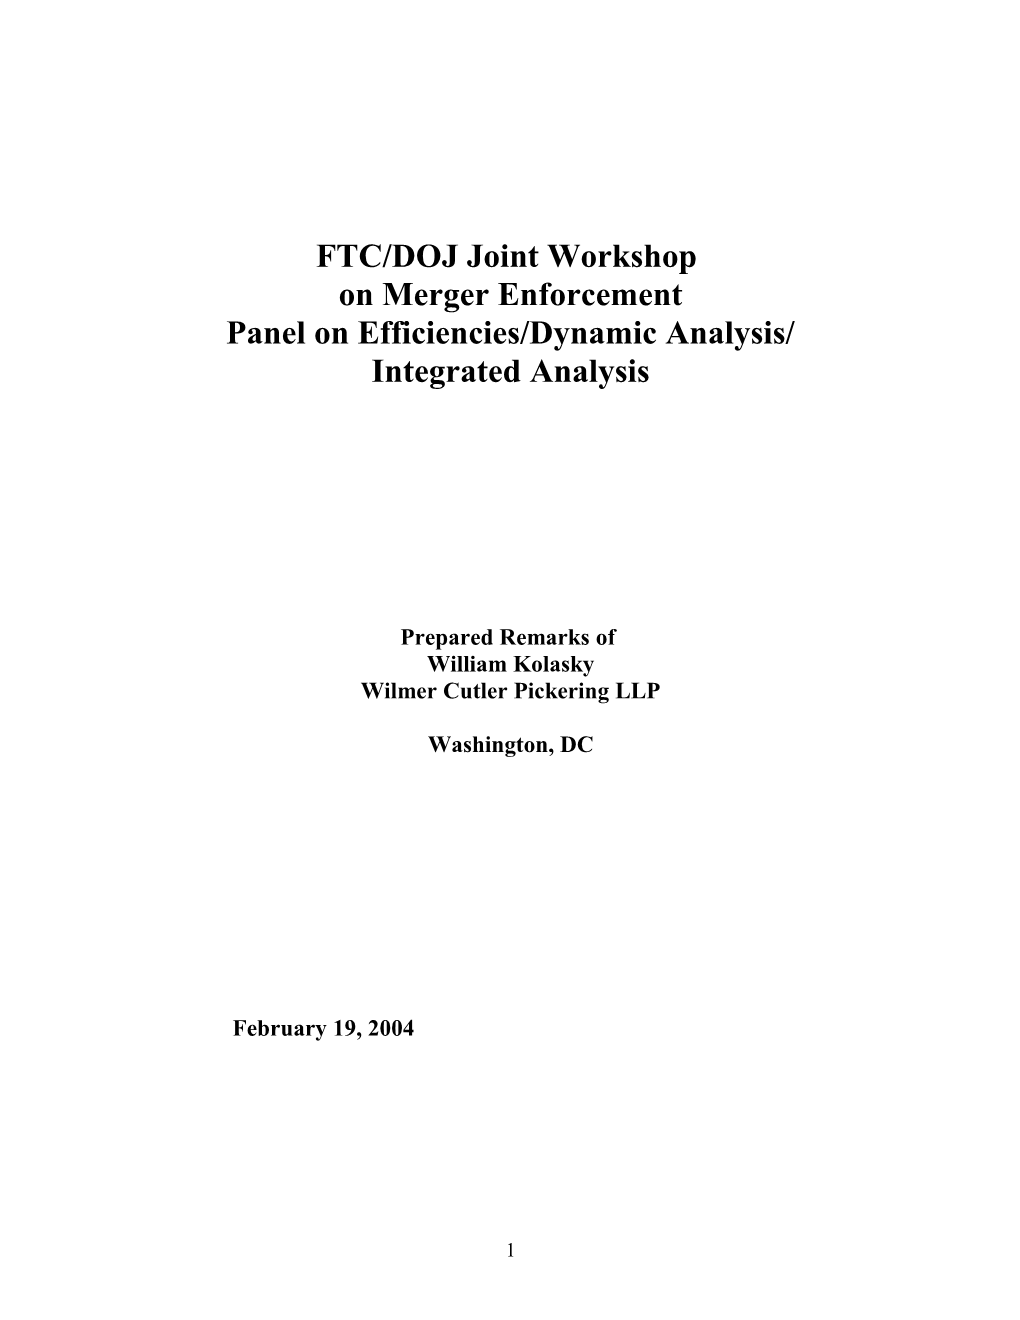 FTC/DOJ Joint Workshop on Merger Enforcement